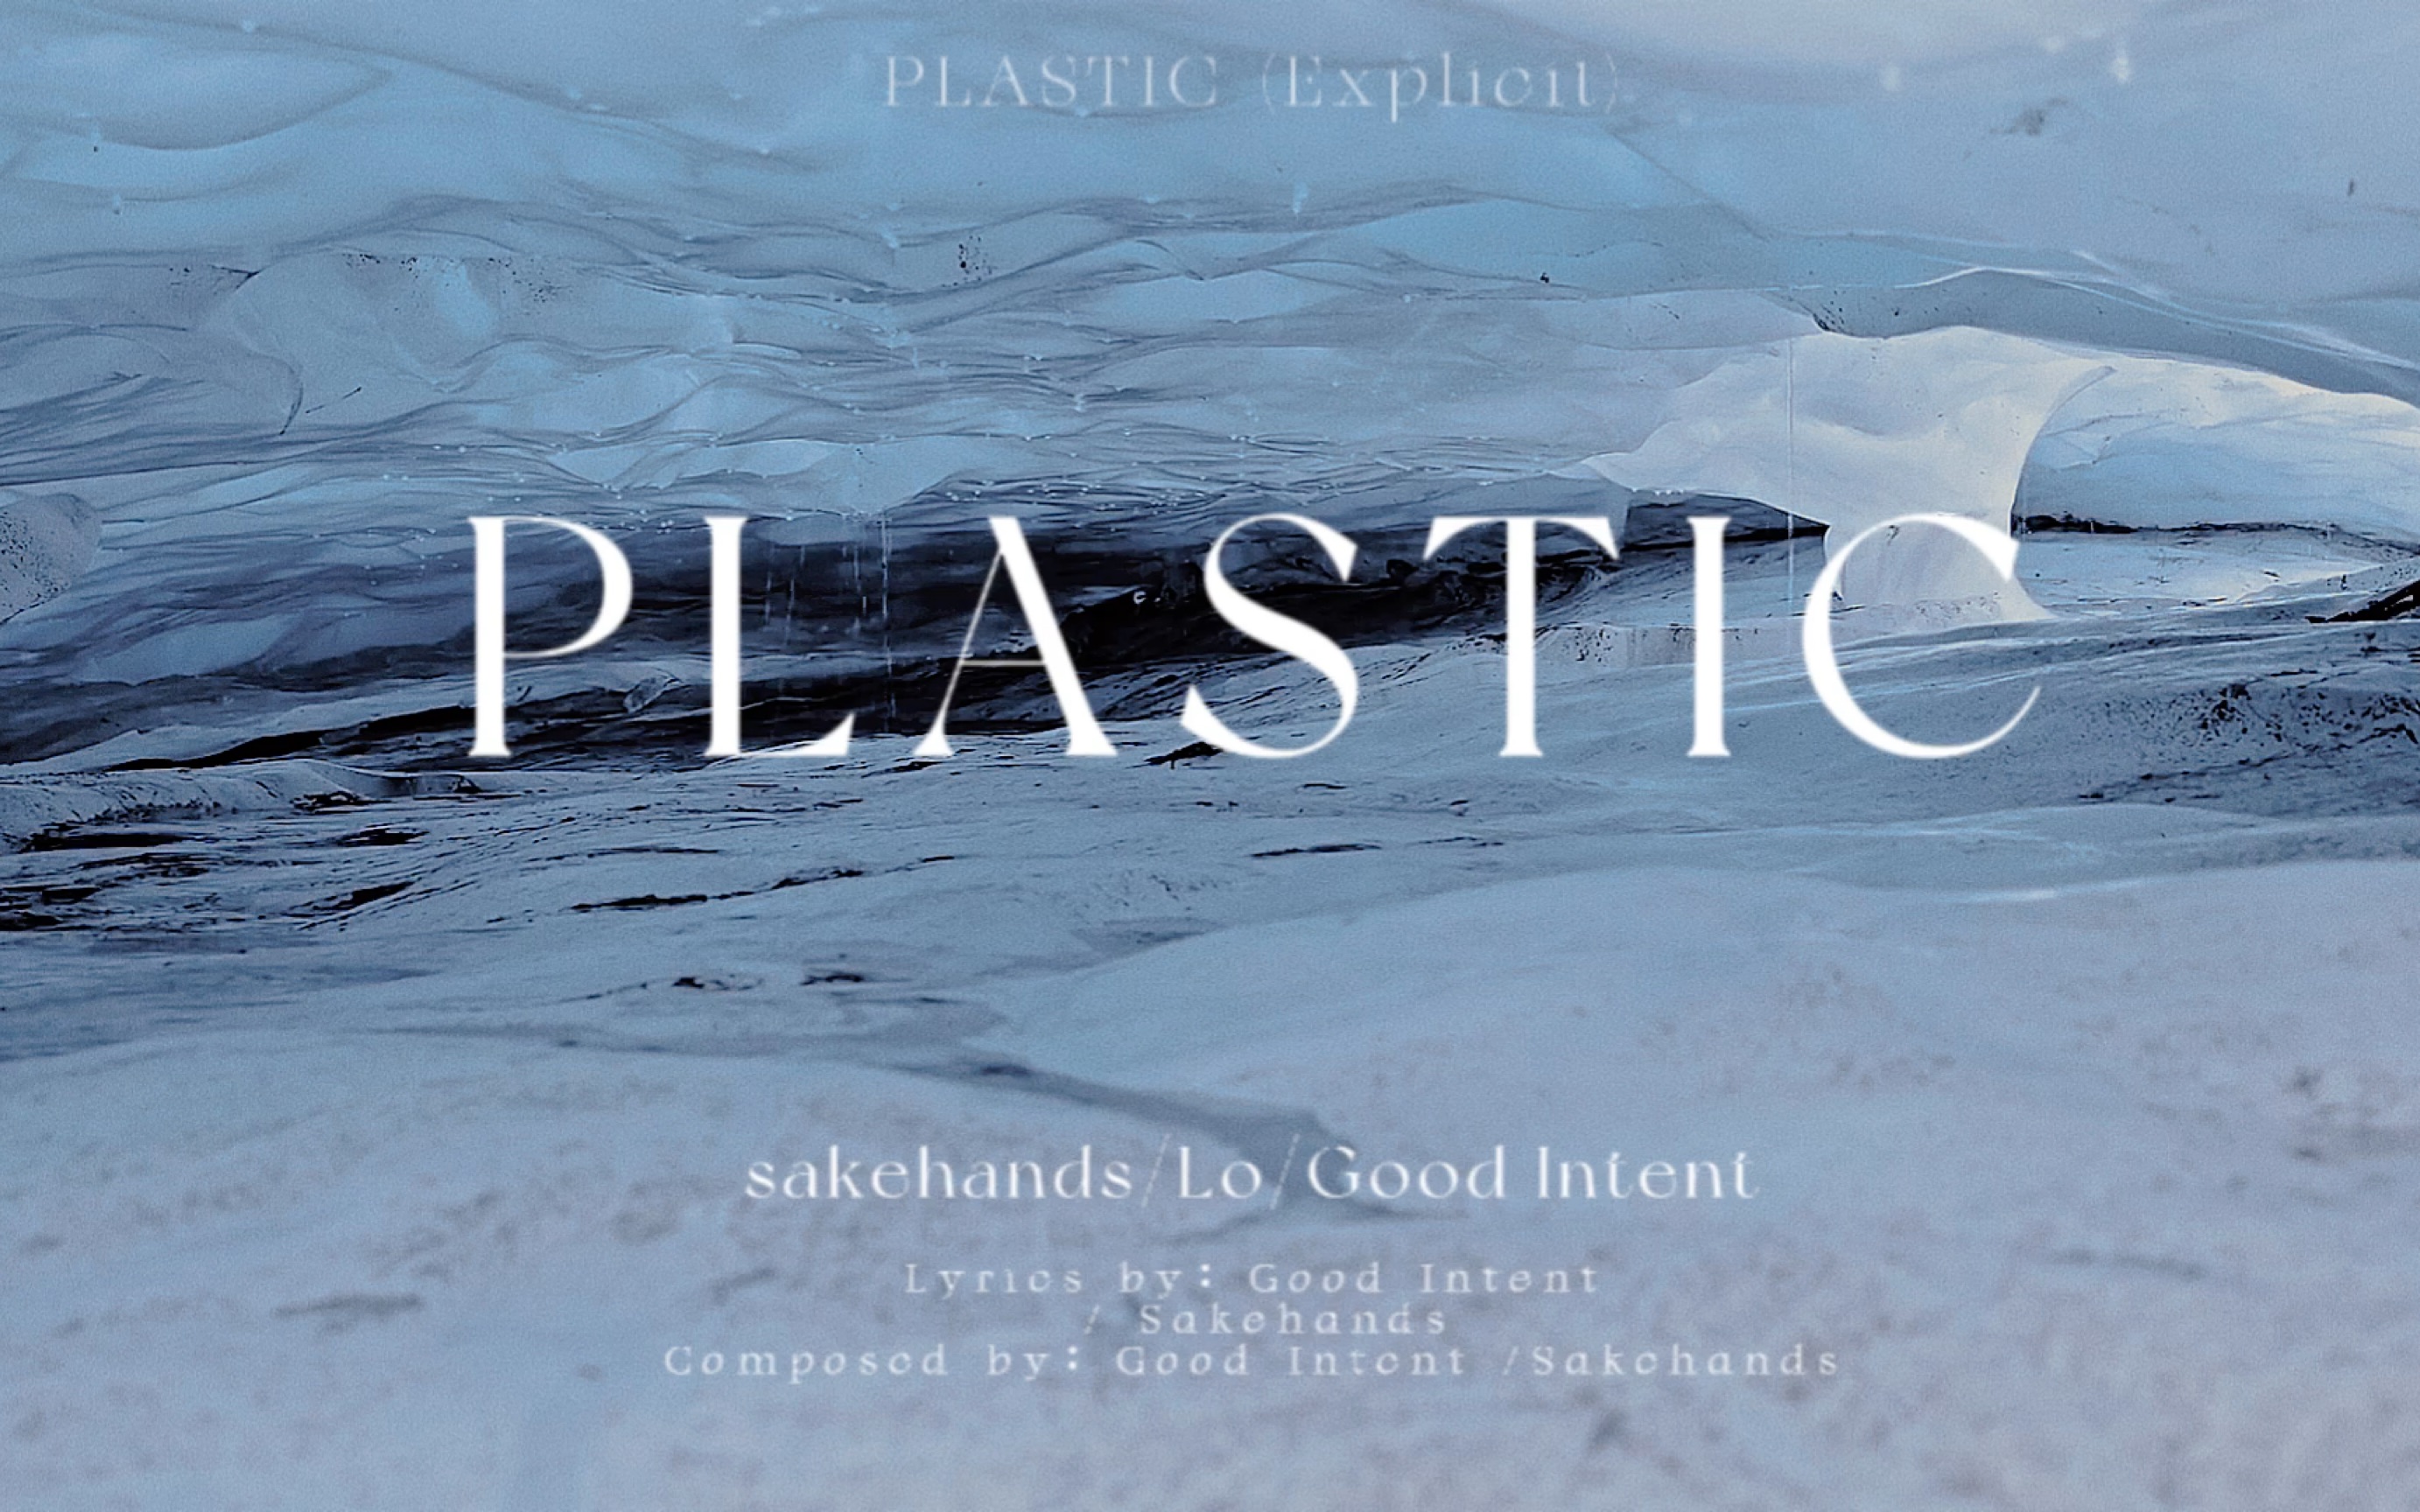 提神醒脑的清爽节奏！PLASTIC (Explicit)-sakehands/Lo/Good Intent